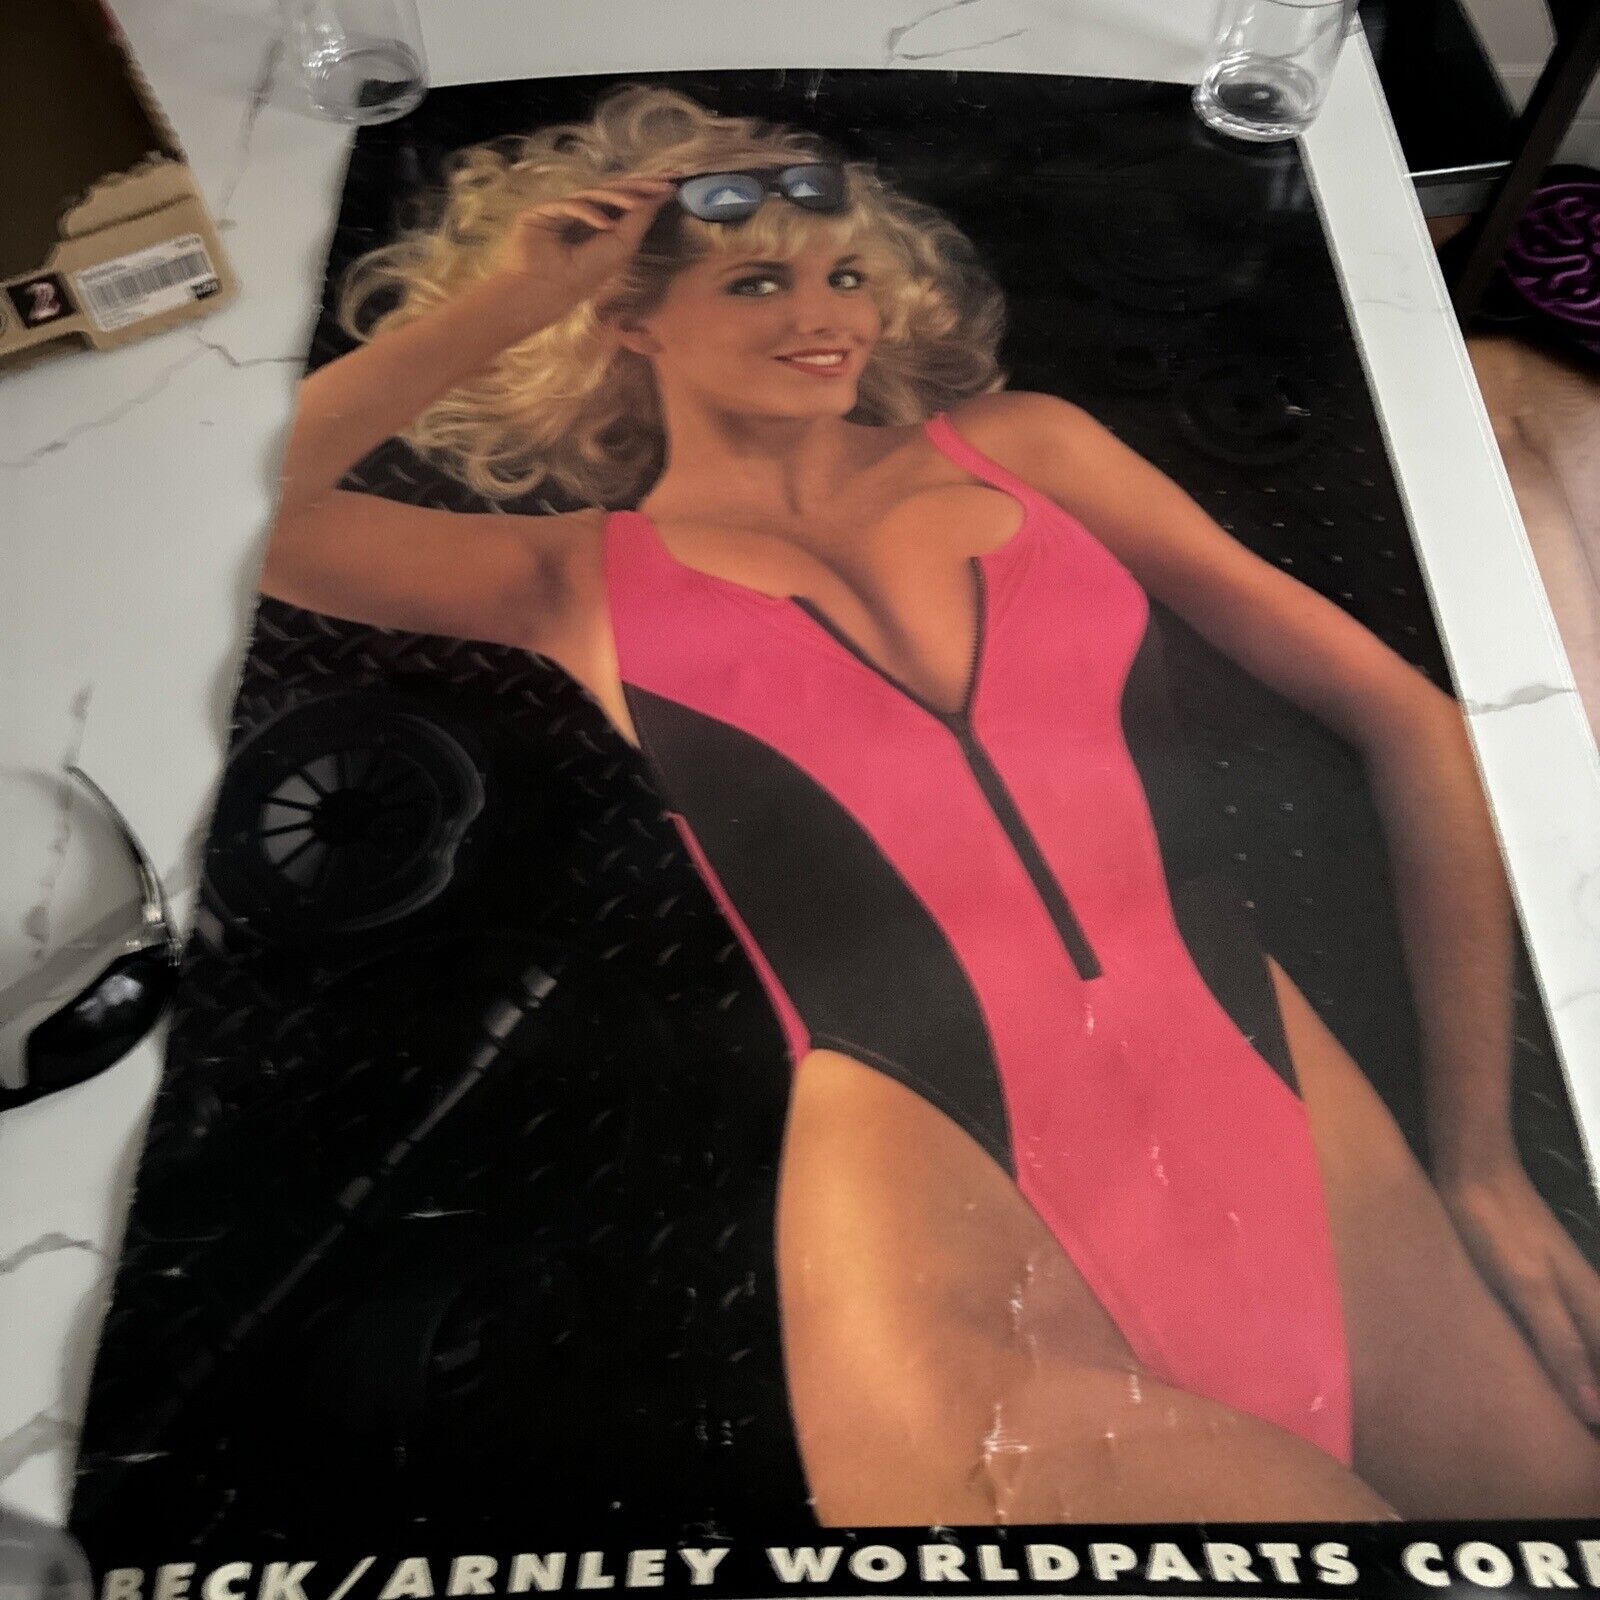 Vintage 90s Beck/Arnley World Parts Corporation Promo Model Girl 36”X24” Poster